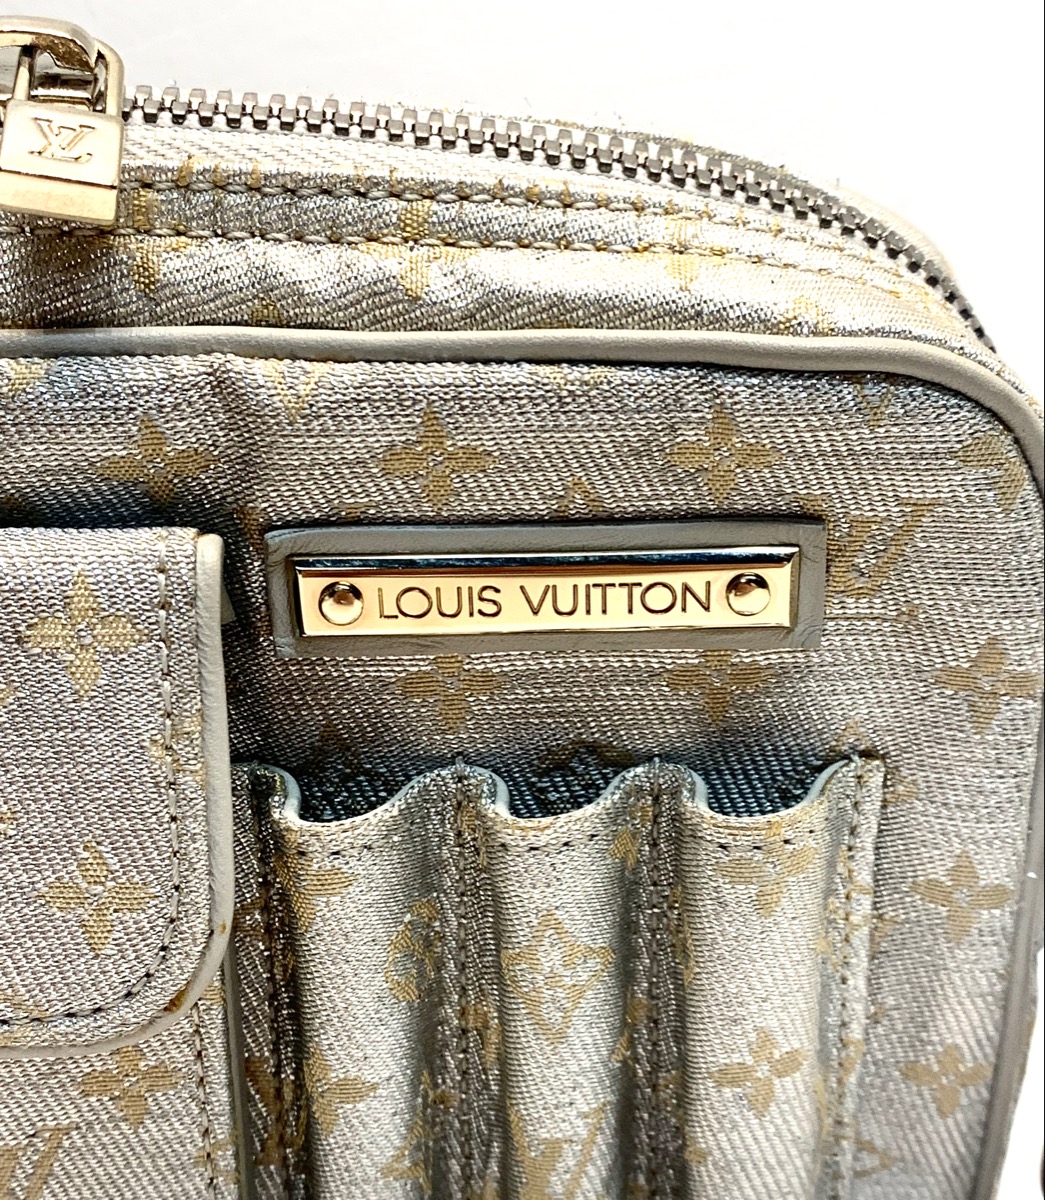 Authentic LOUIS VUITTON Handbag LV MCKENNA GOLD SILVER SHINE Limited Edition BAG Very Good ...